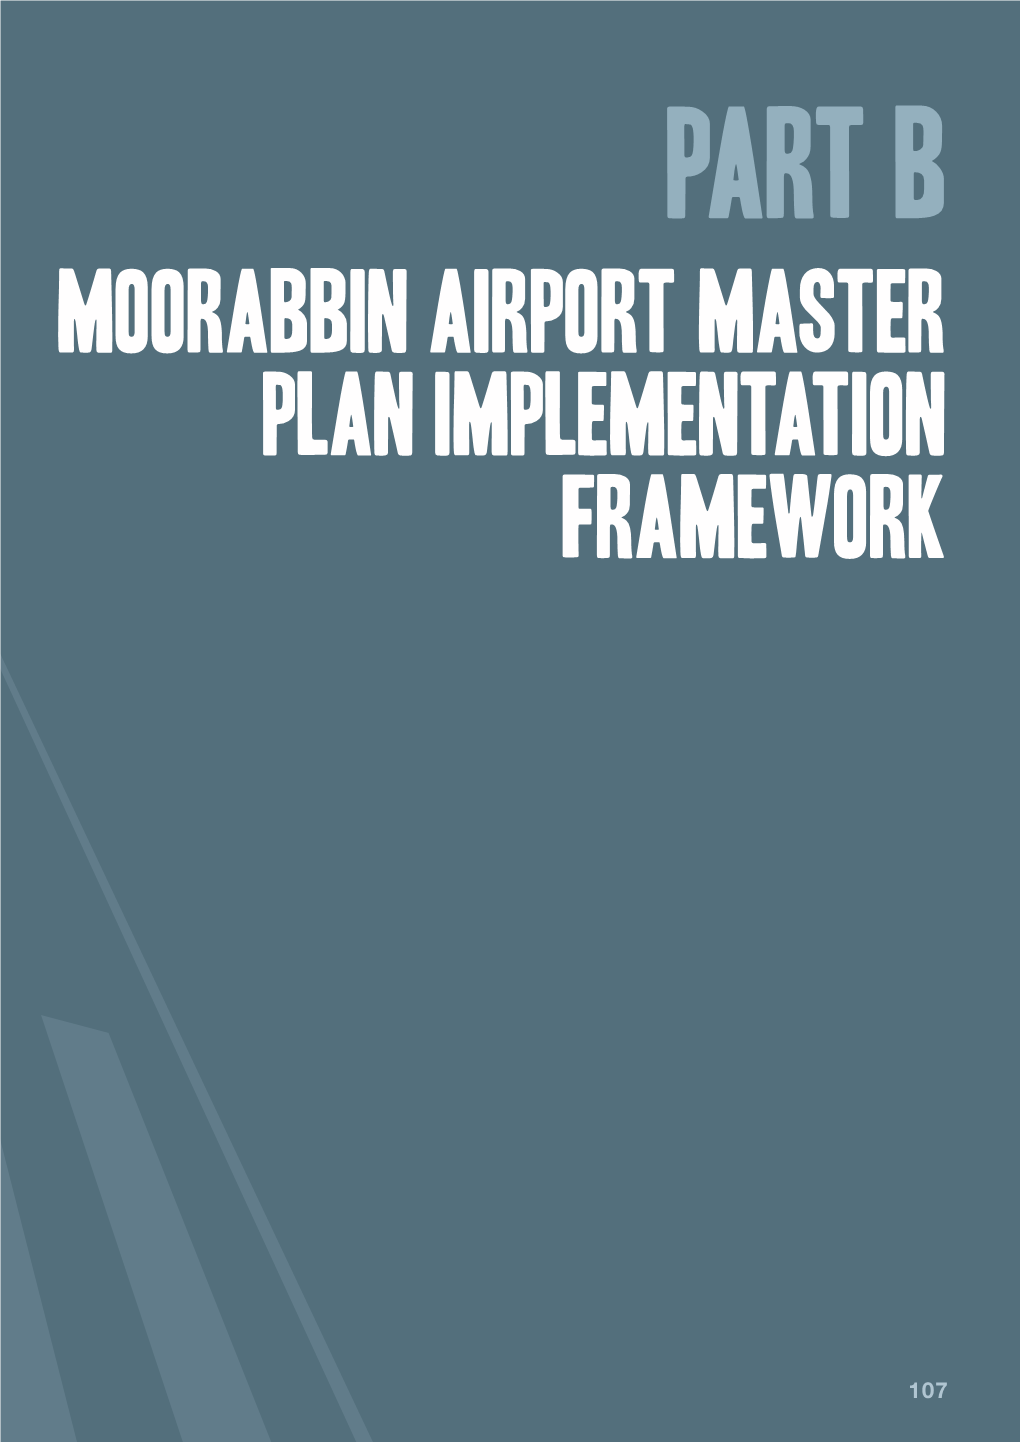 Moorabbin Airport Master Plan Implementation Framework